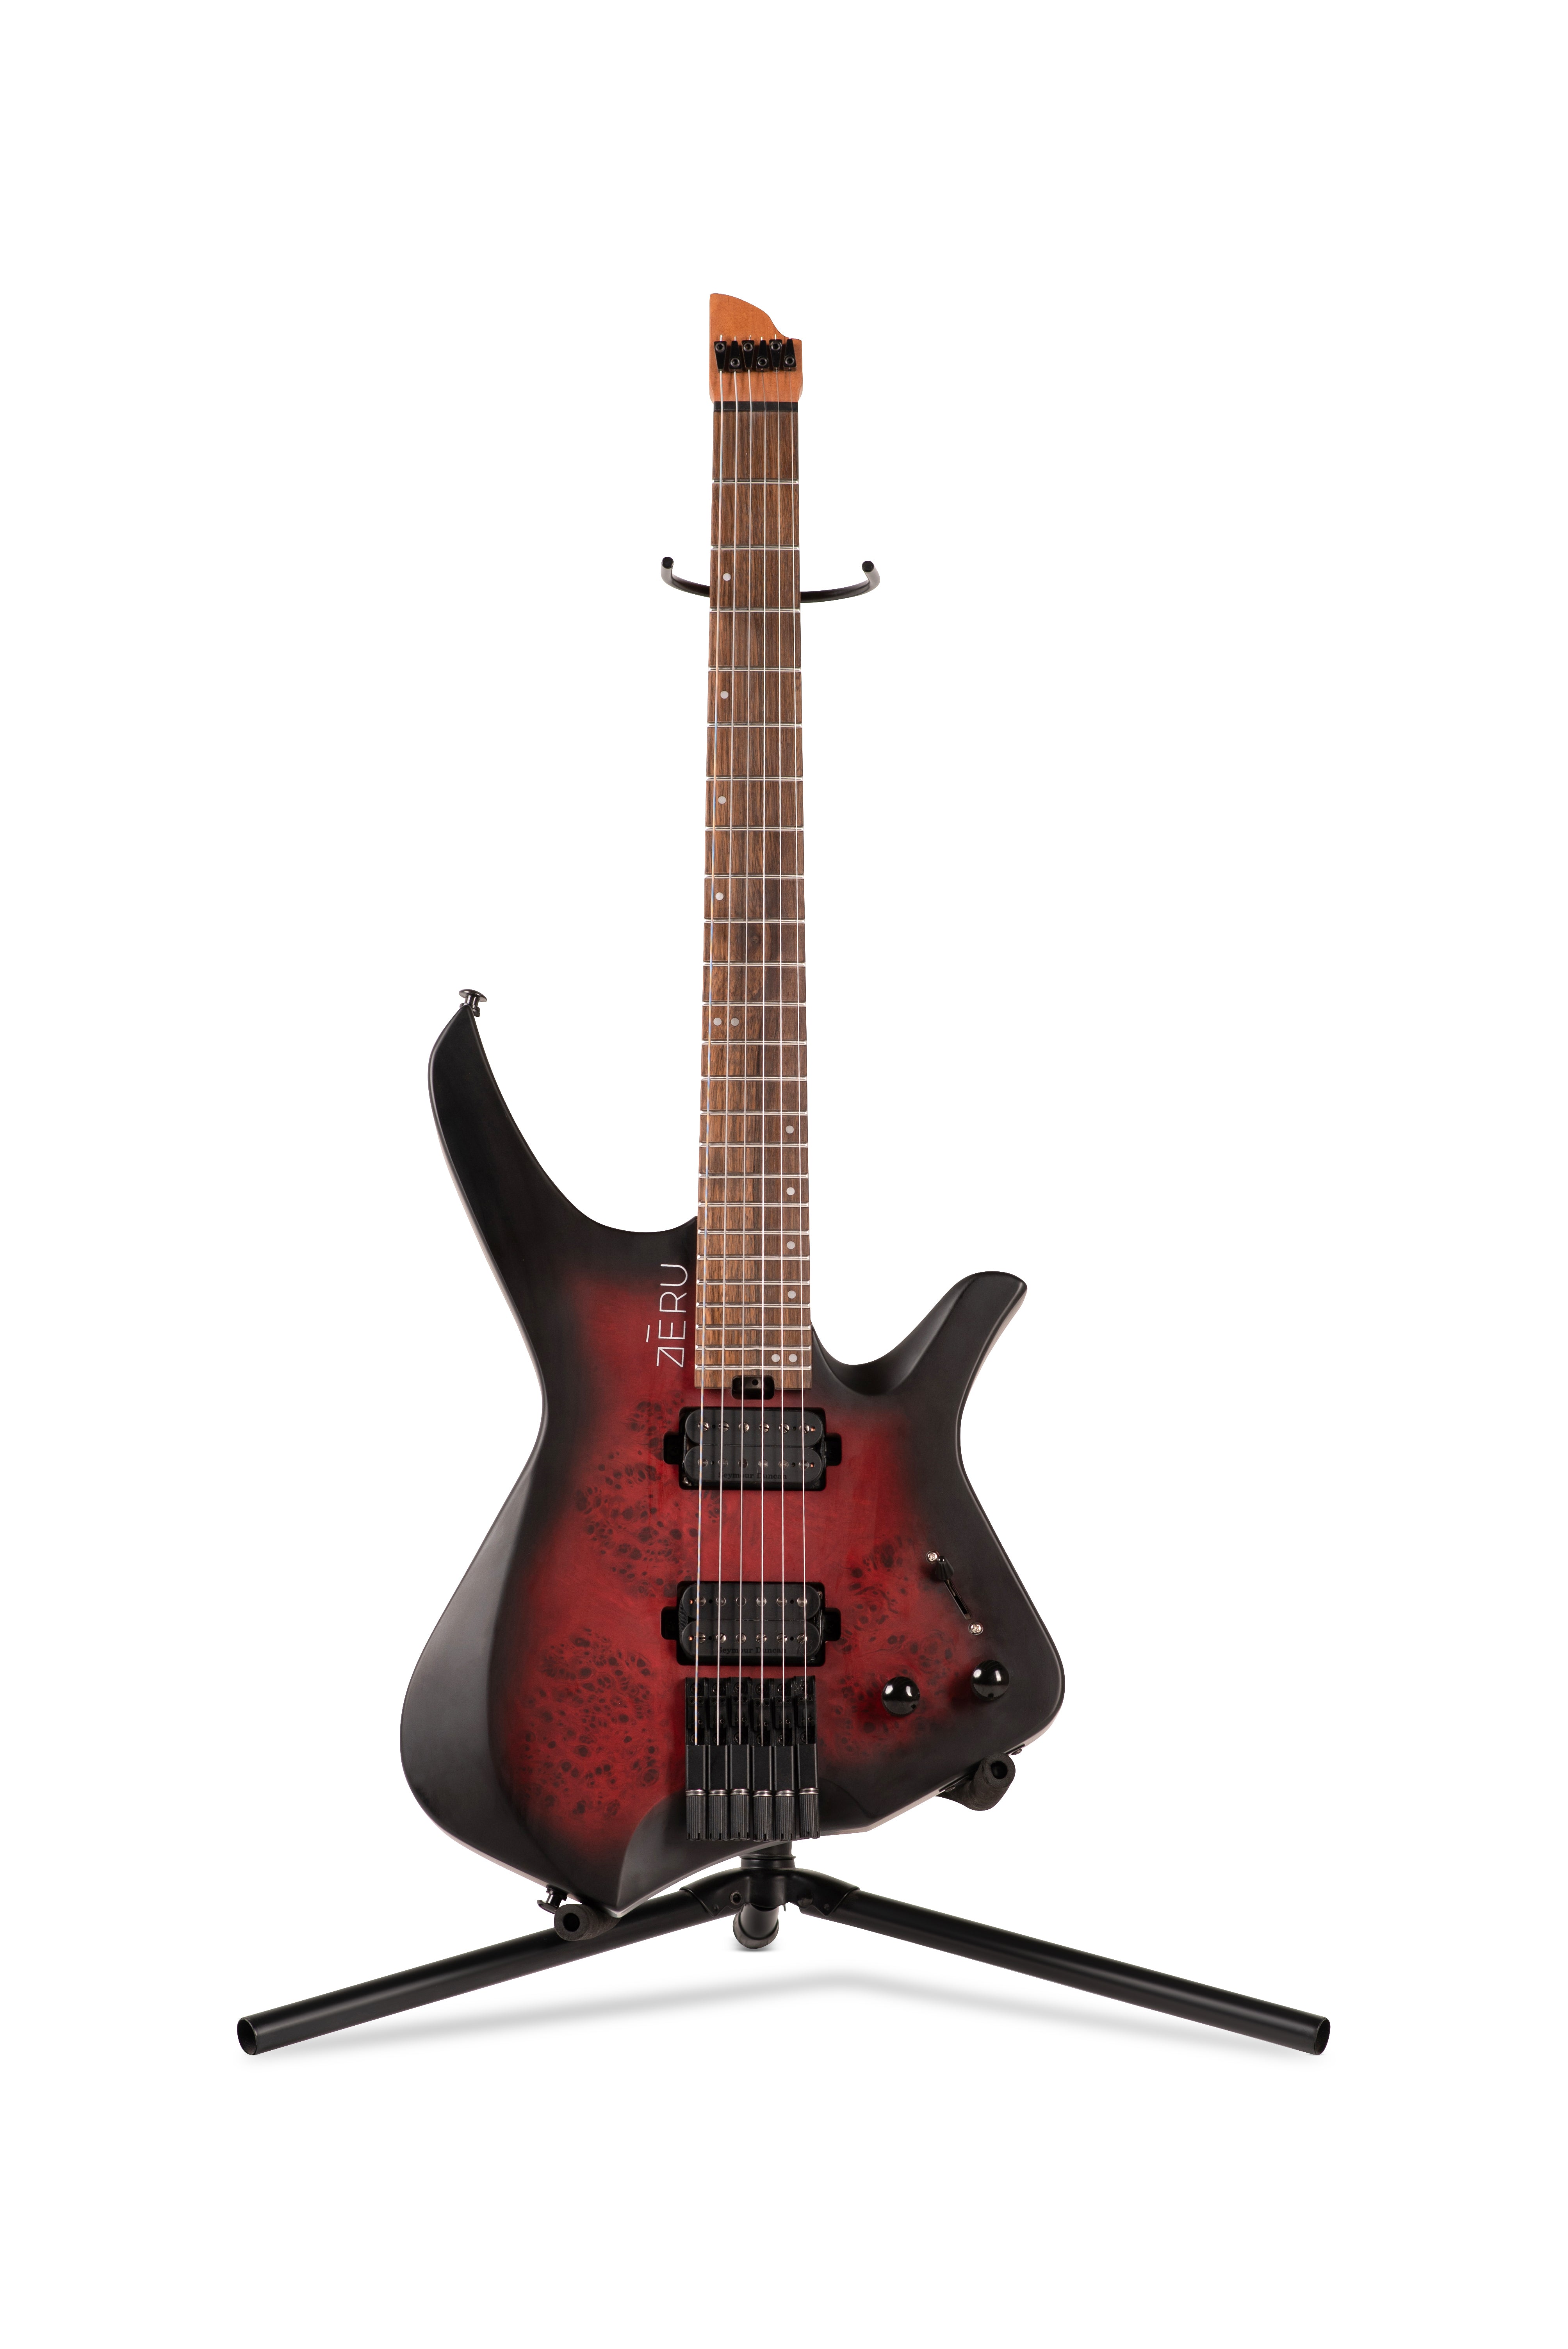 ZERU VOID Justus Hajas Signature Series 6 String Headless Guitar in Scorched Scarlet